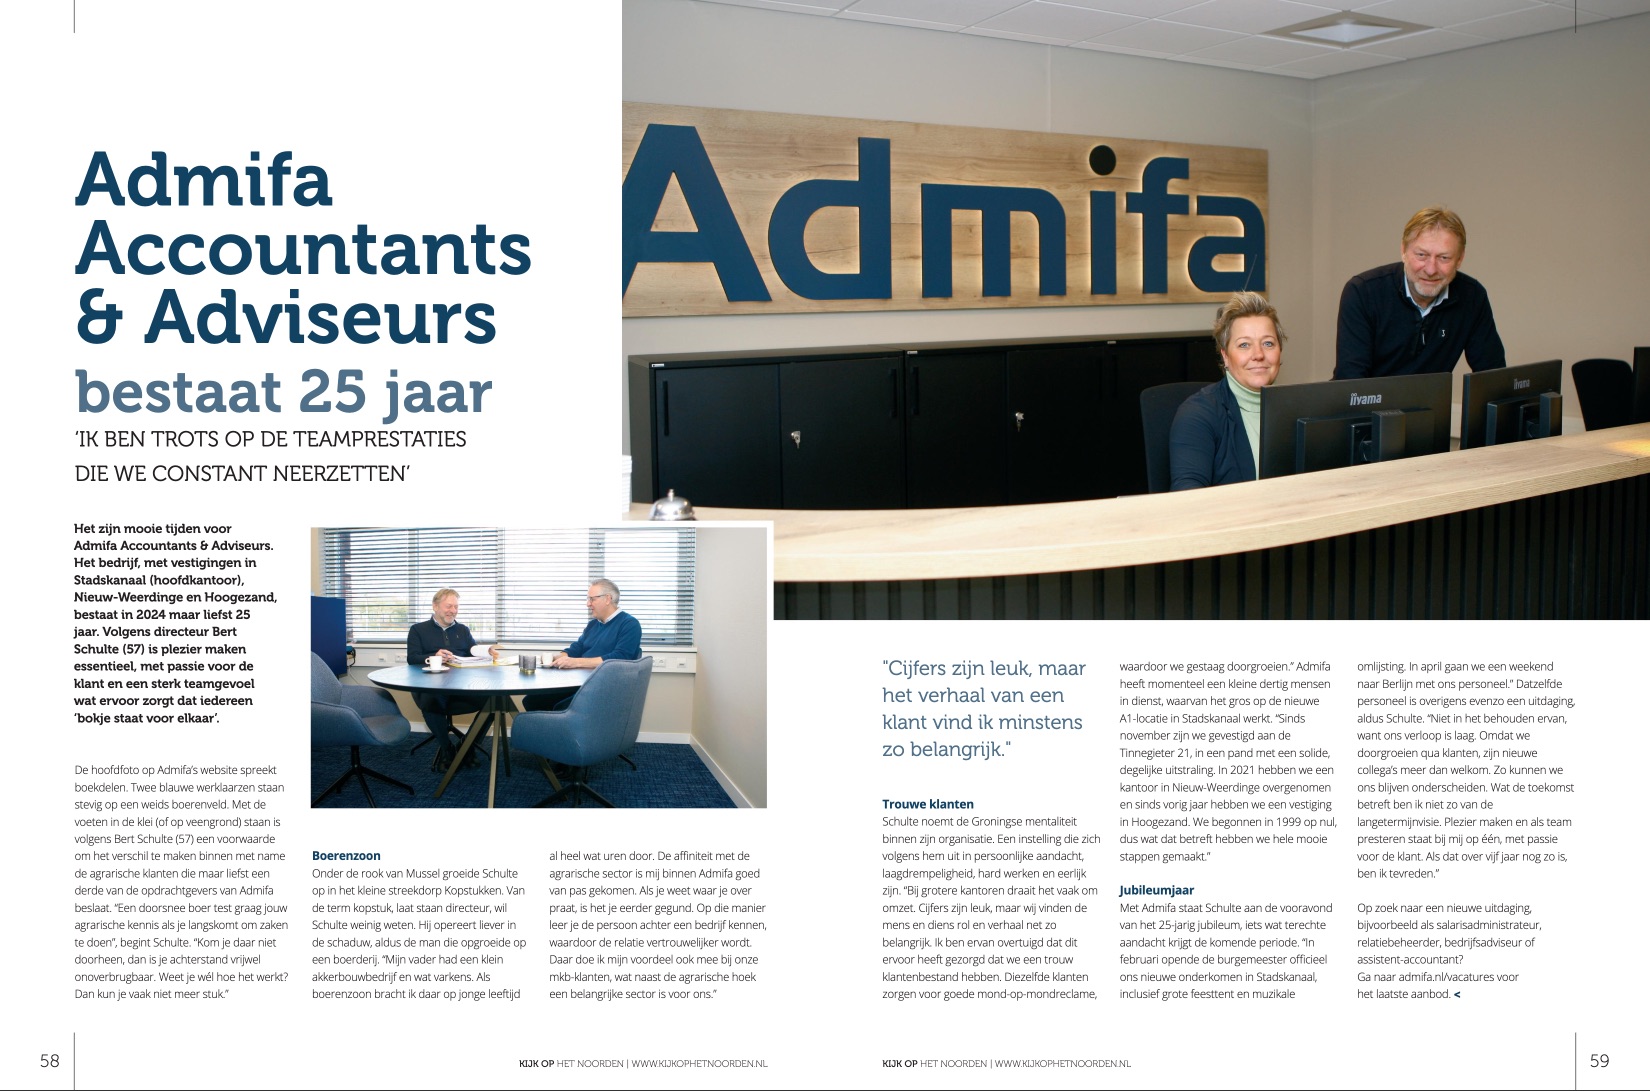 Admifa Accountants en Adviseurs Stadskanaal in de media